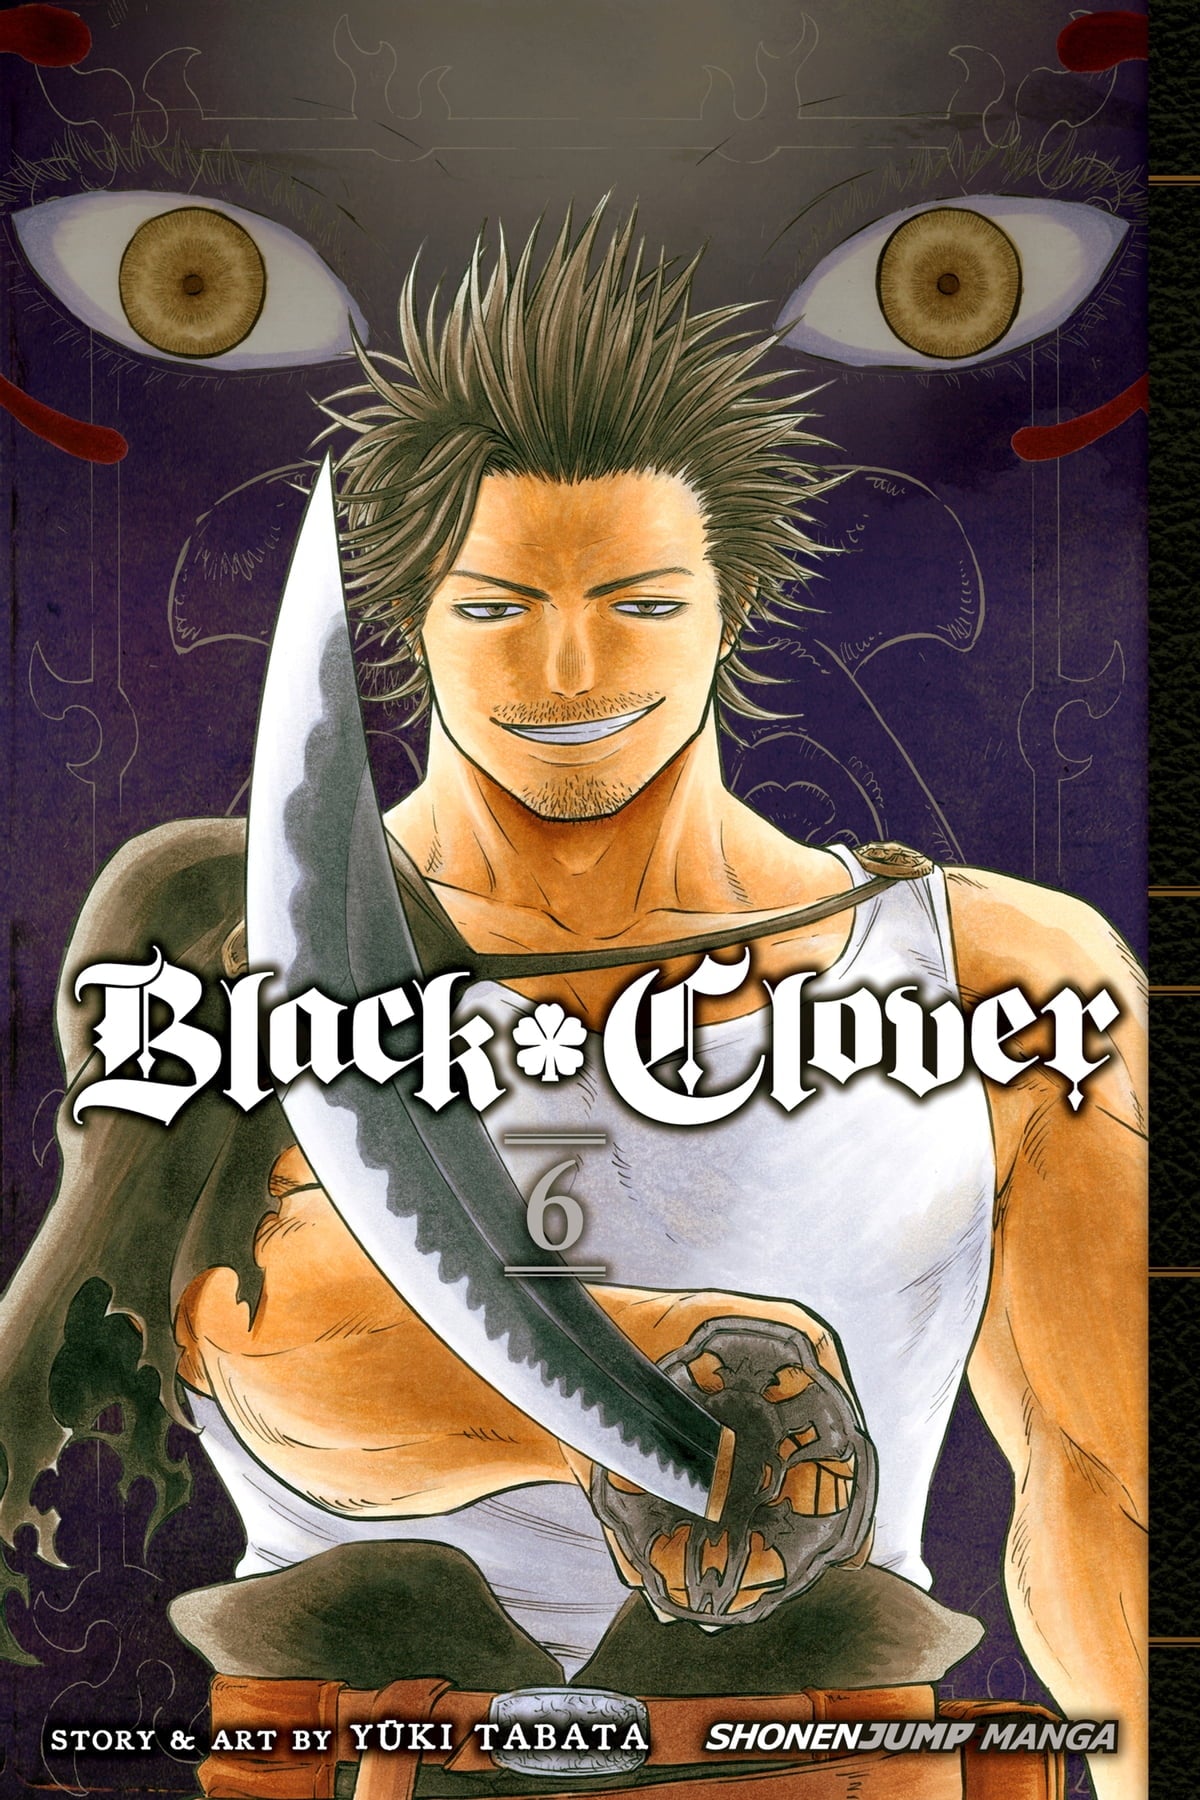 Black Clover Vol. 06